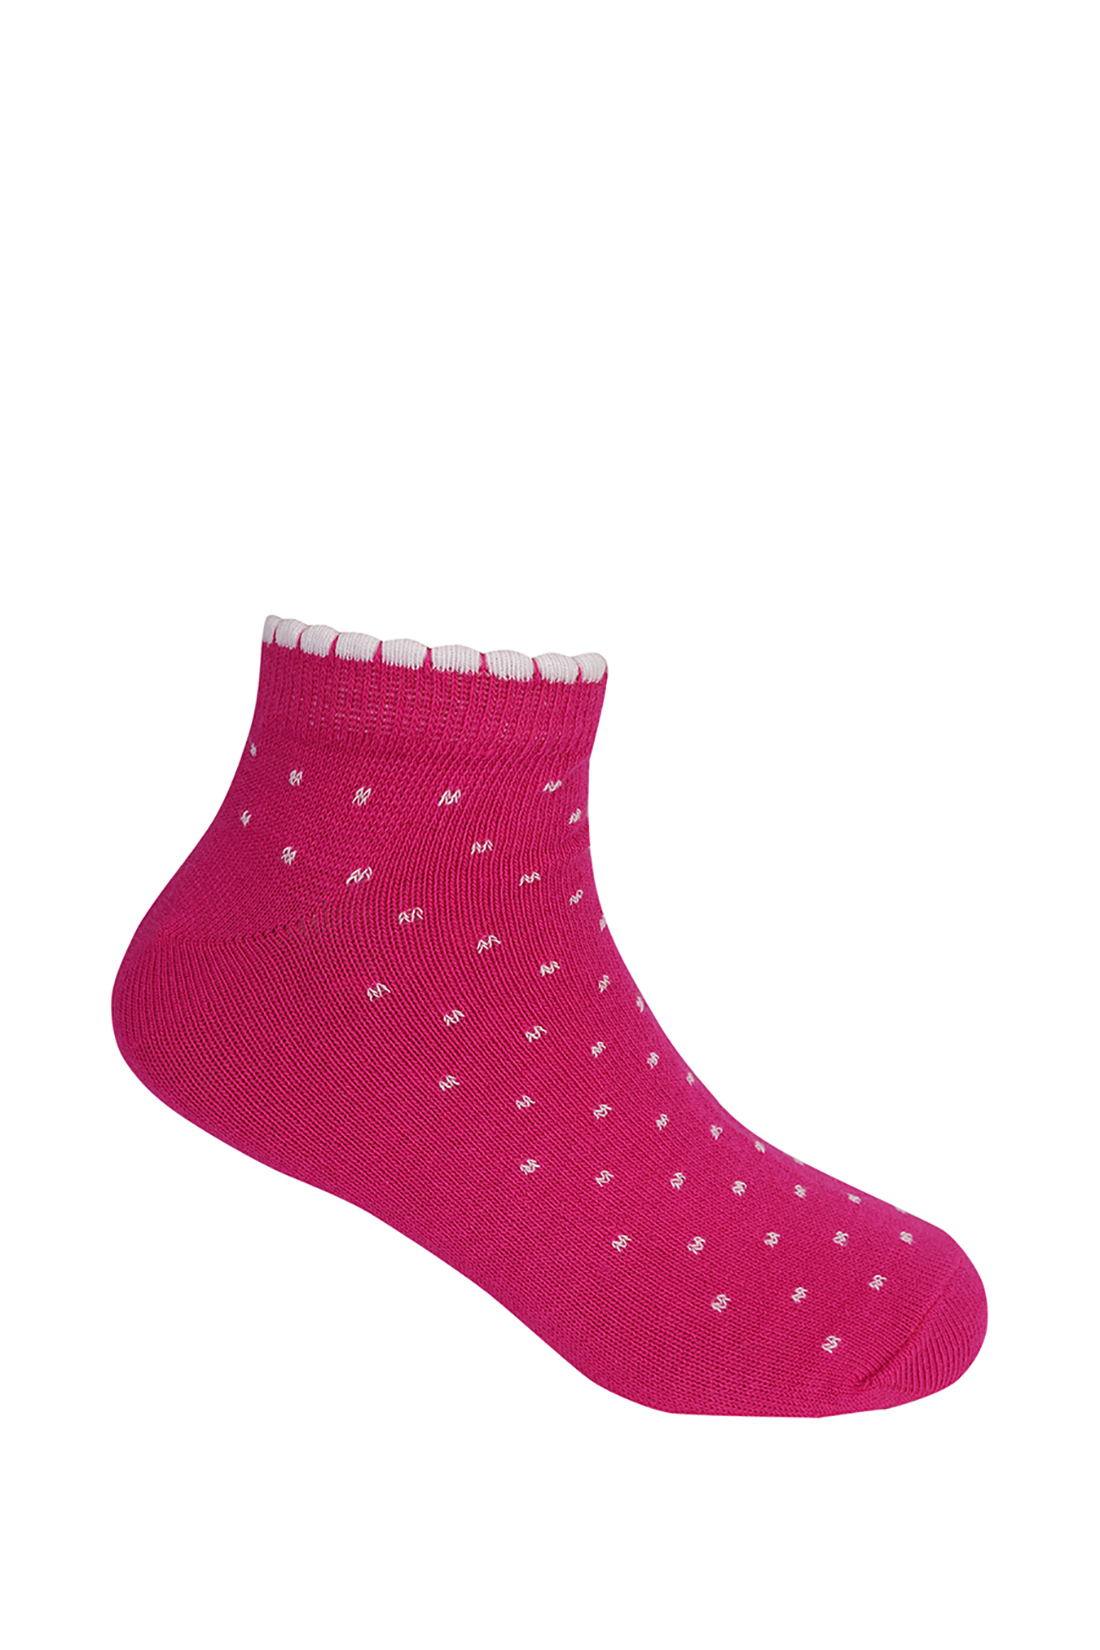 Носки для девочки (арт. baon BK390003), размер 26/28, цвет розовый